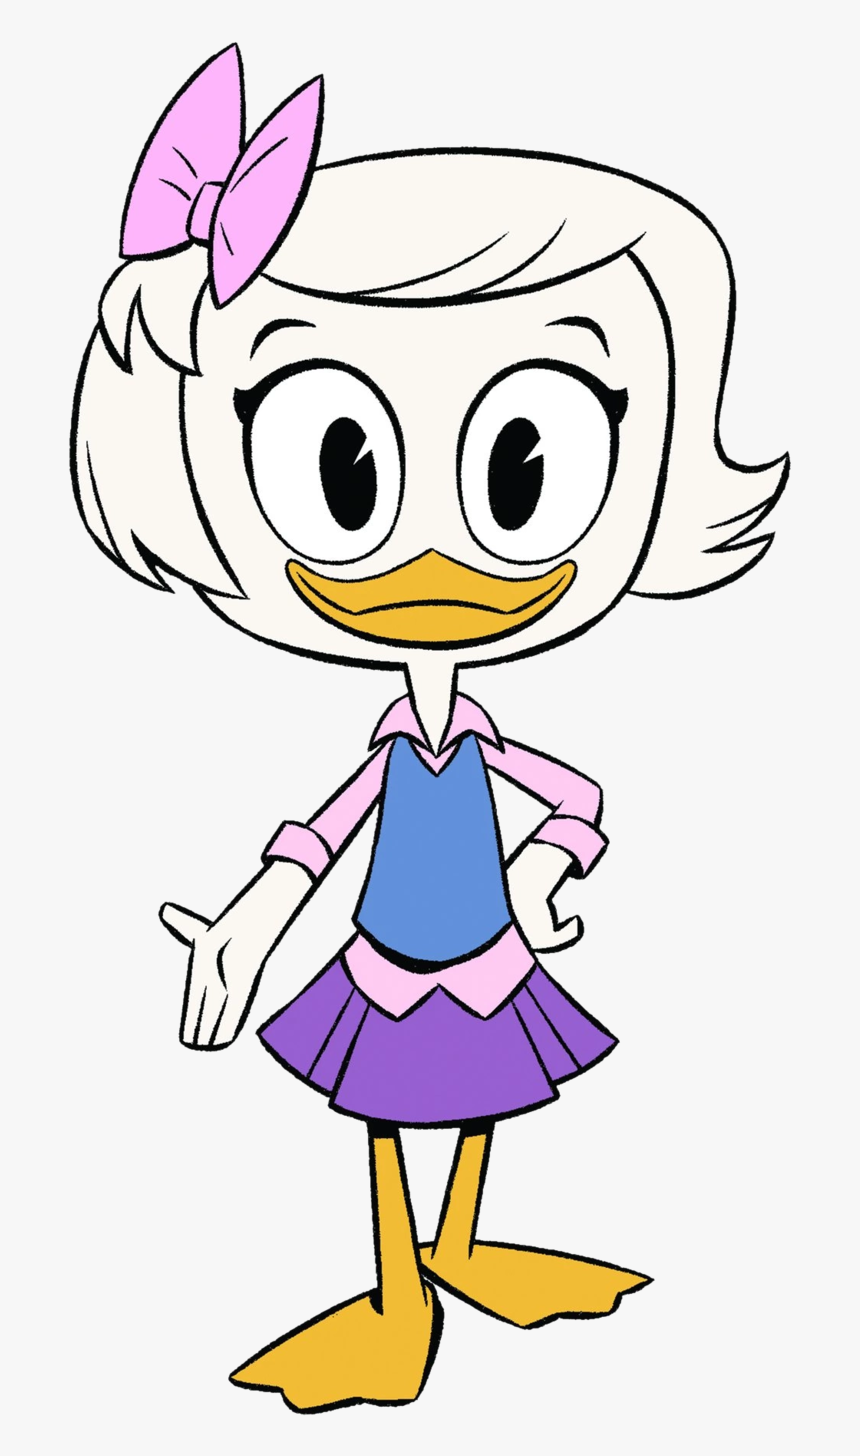 Webby Vanderquack - Ducktales Characters, HD Png Download, Free Download